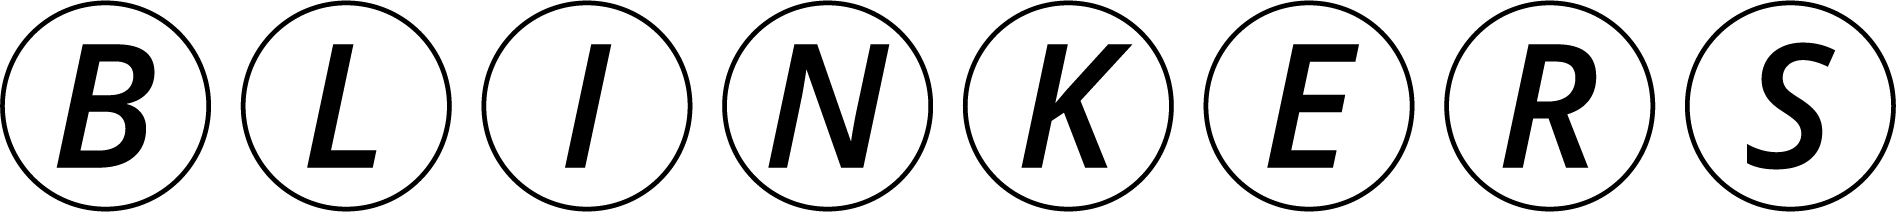 Blinkers horizontal logo